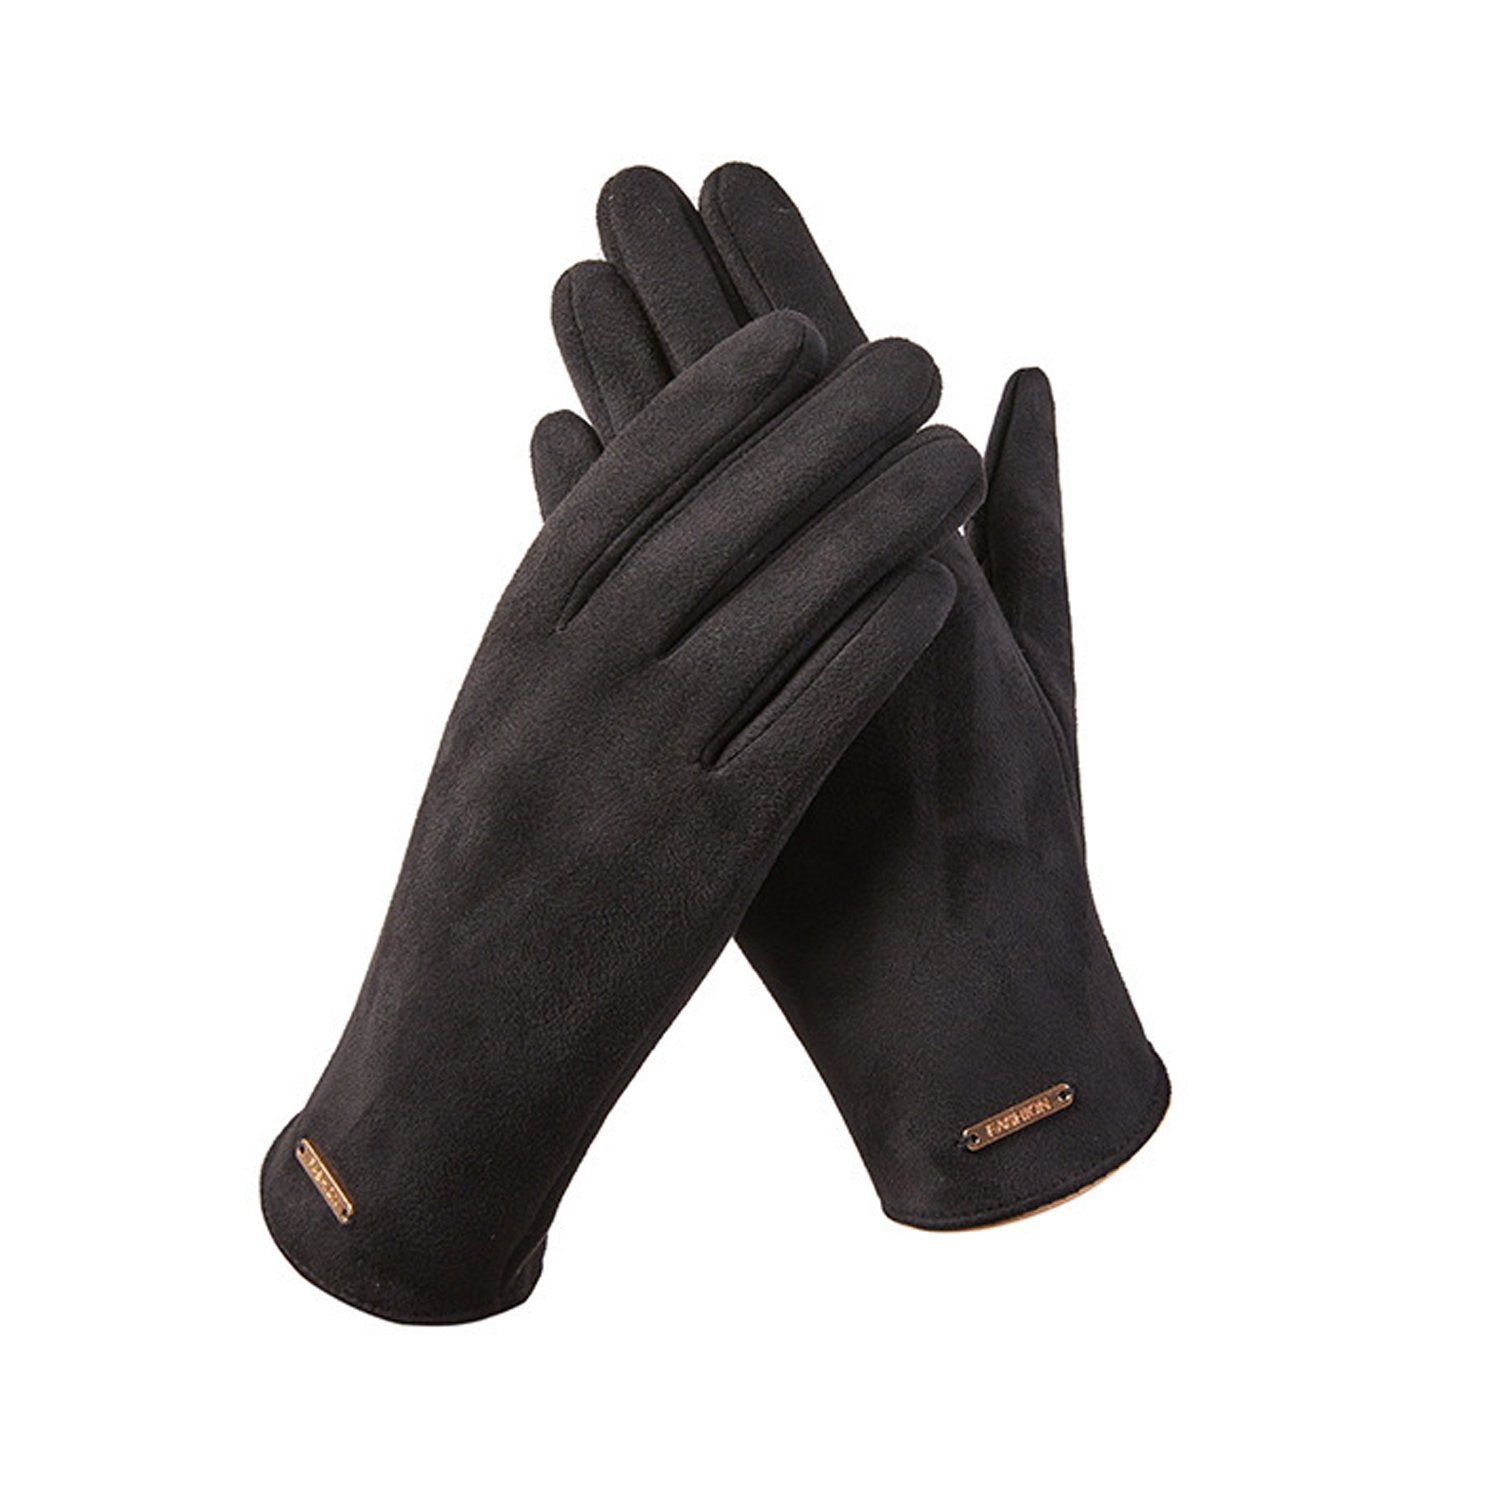 Fleecehandschuhe Warme Schwarz MAGICSHE Herren/Damen FahrradhandschuheTouchscreen Handschuhe